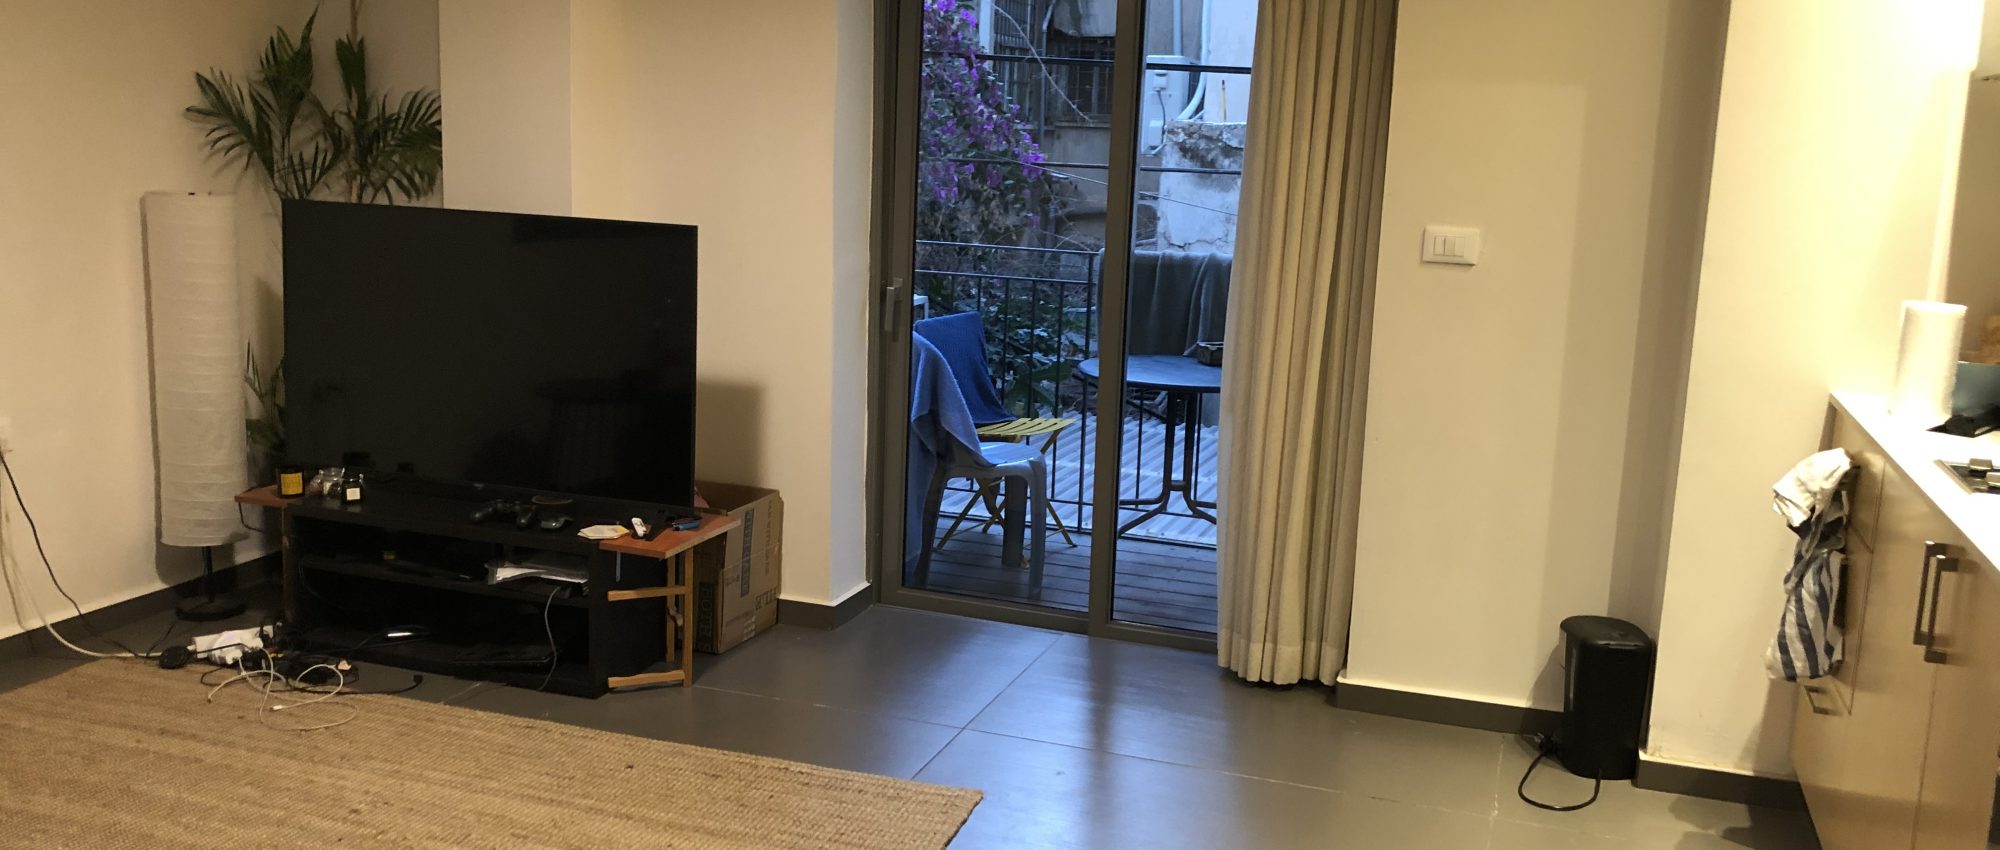 2 Bedroom Apartment for Mid-Term Rent in the Florentine Quarter of Tel Aviv